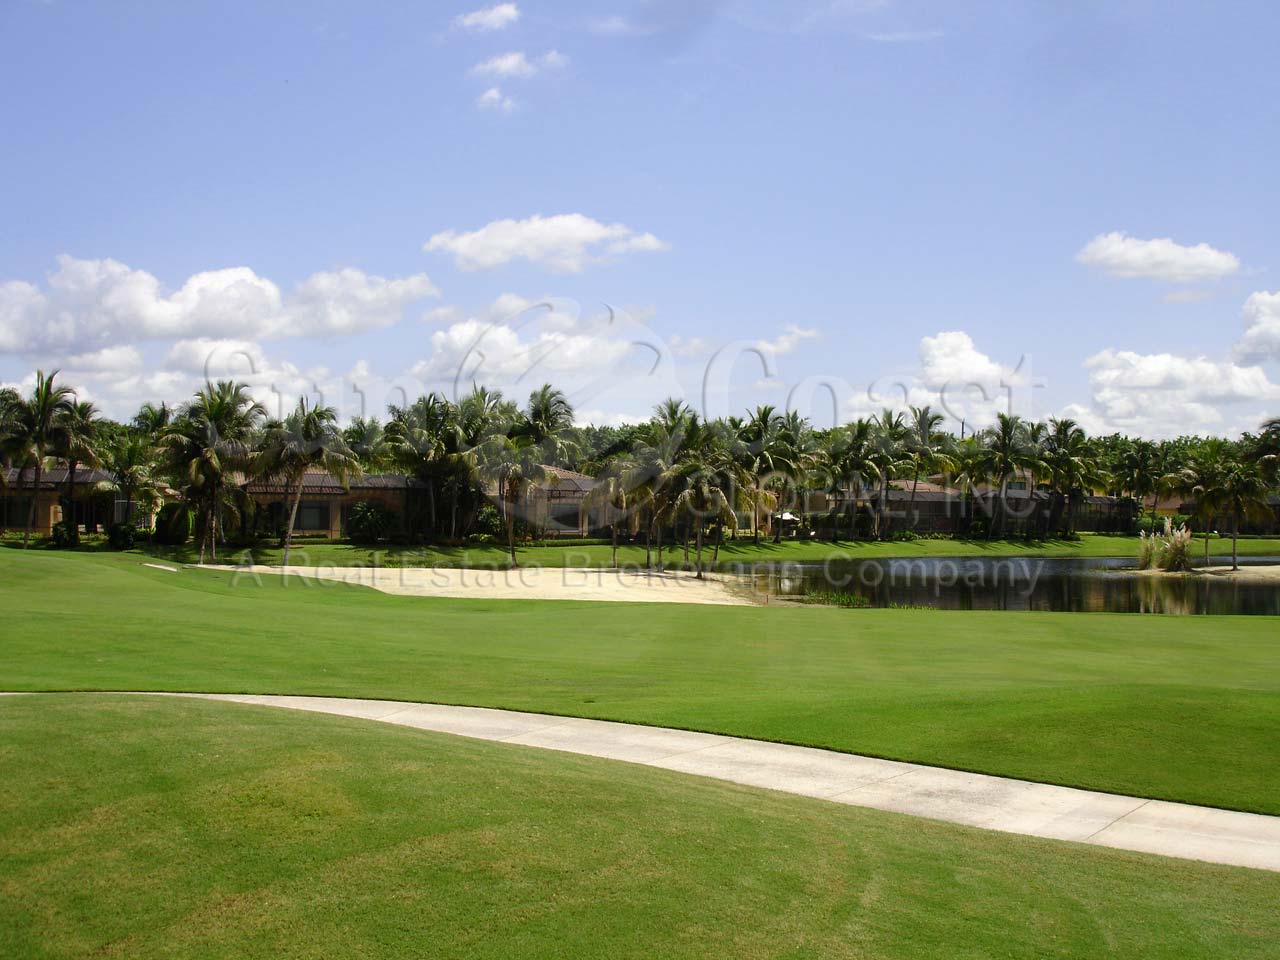 Capistrano golf course view